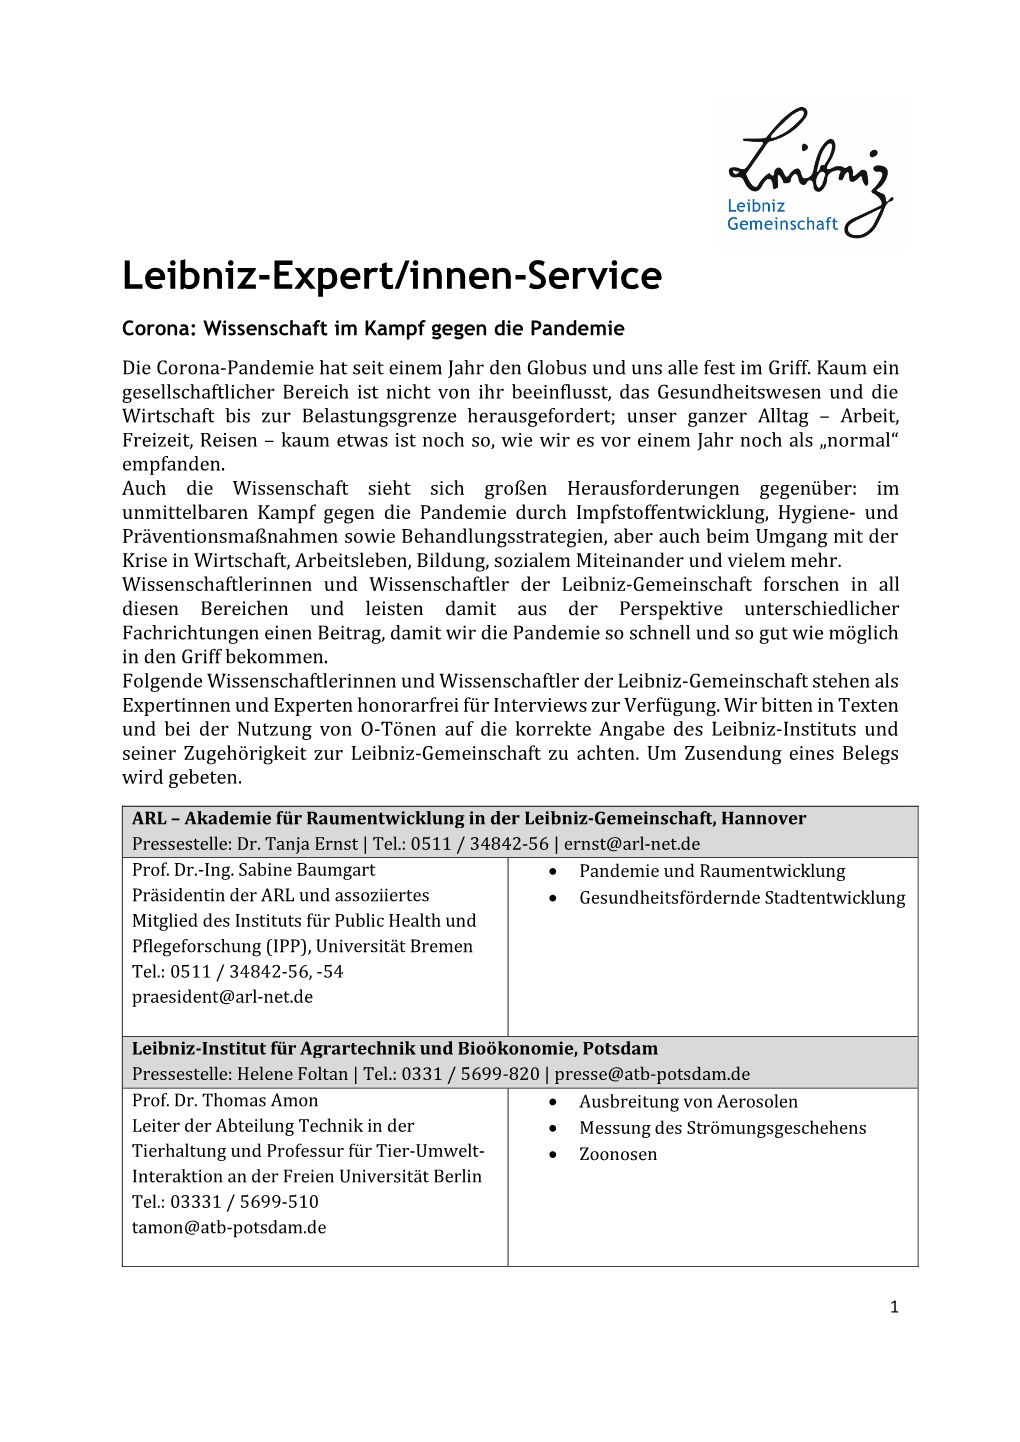 Leibniz-Expert/Innenservice "Corona